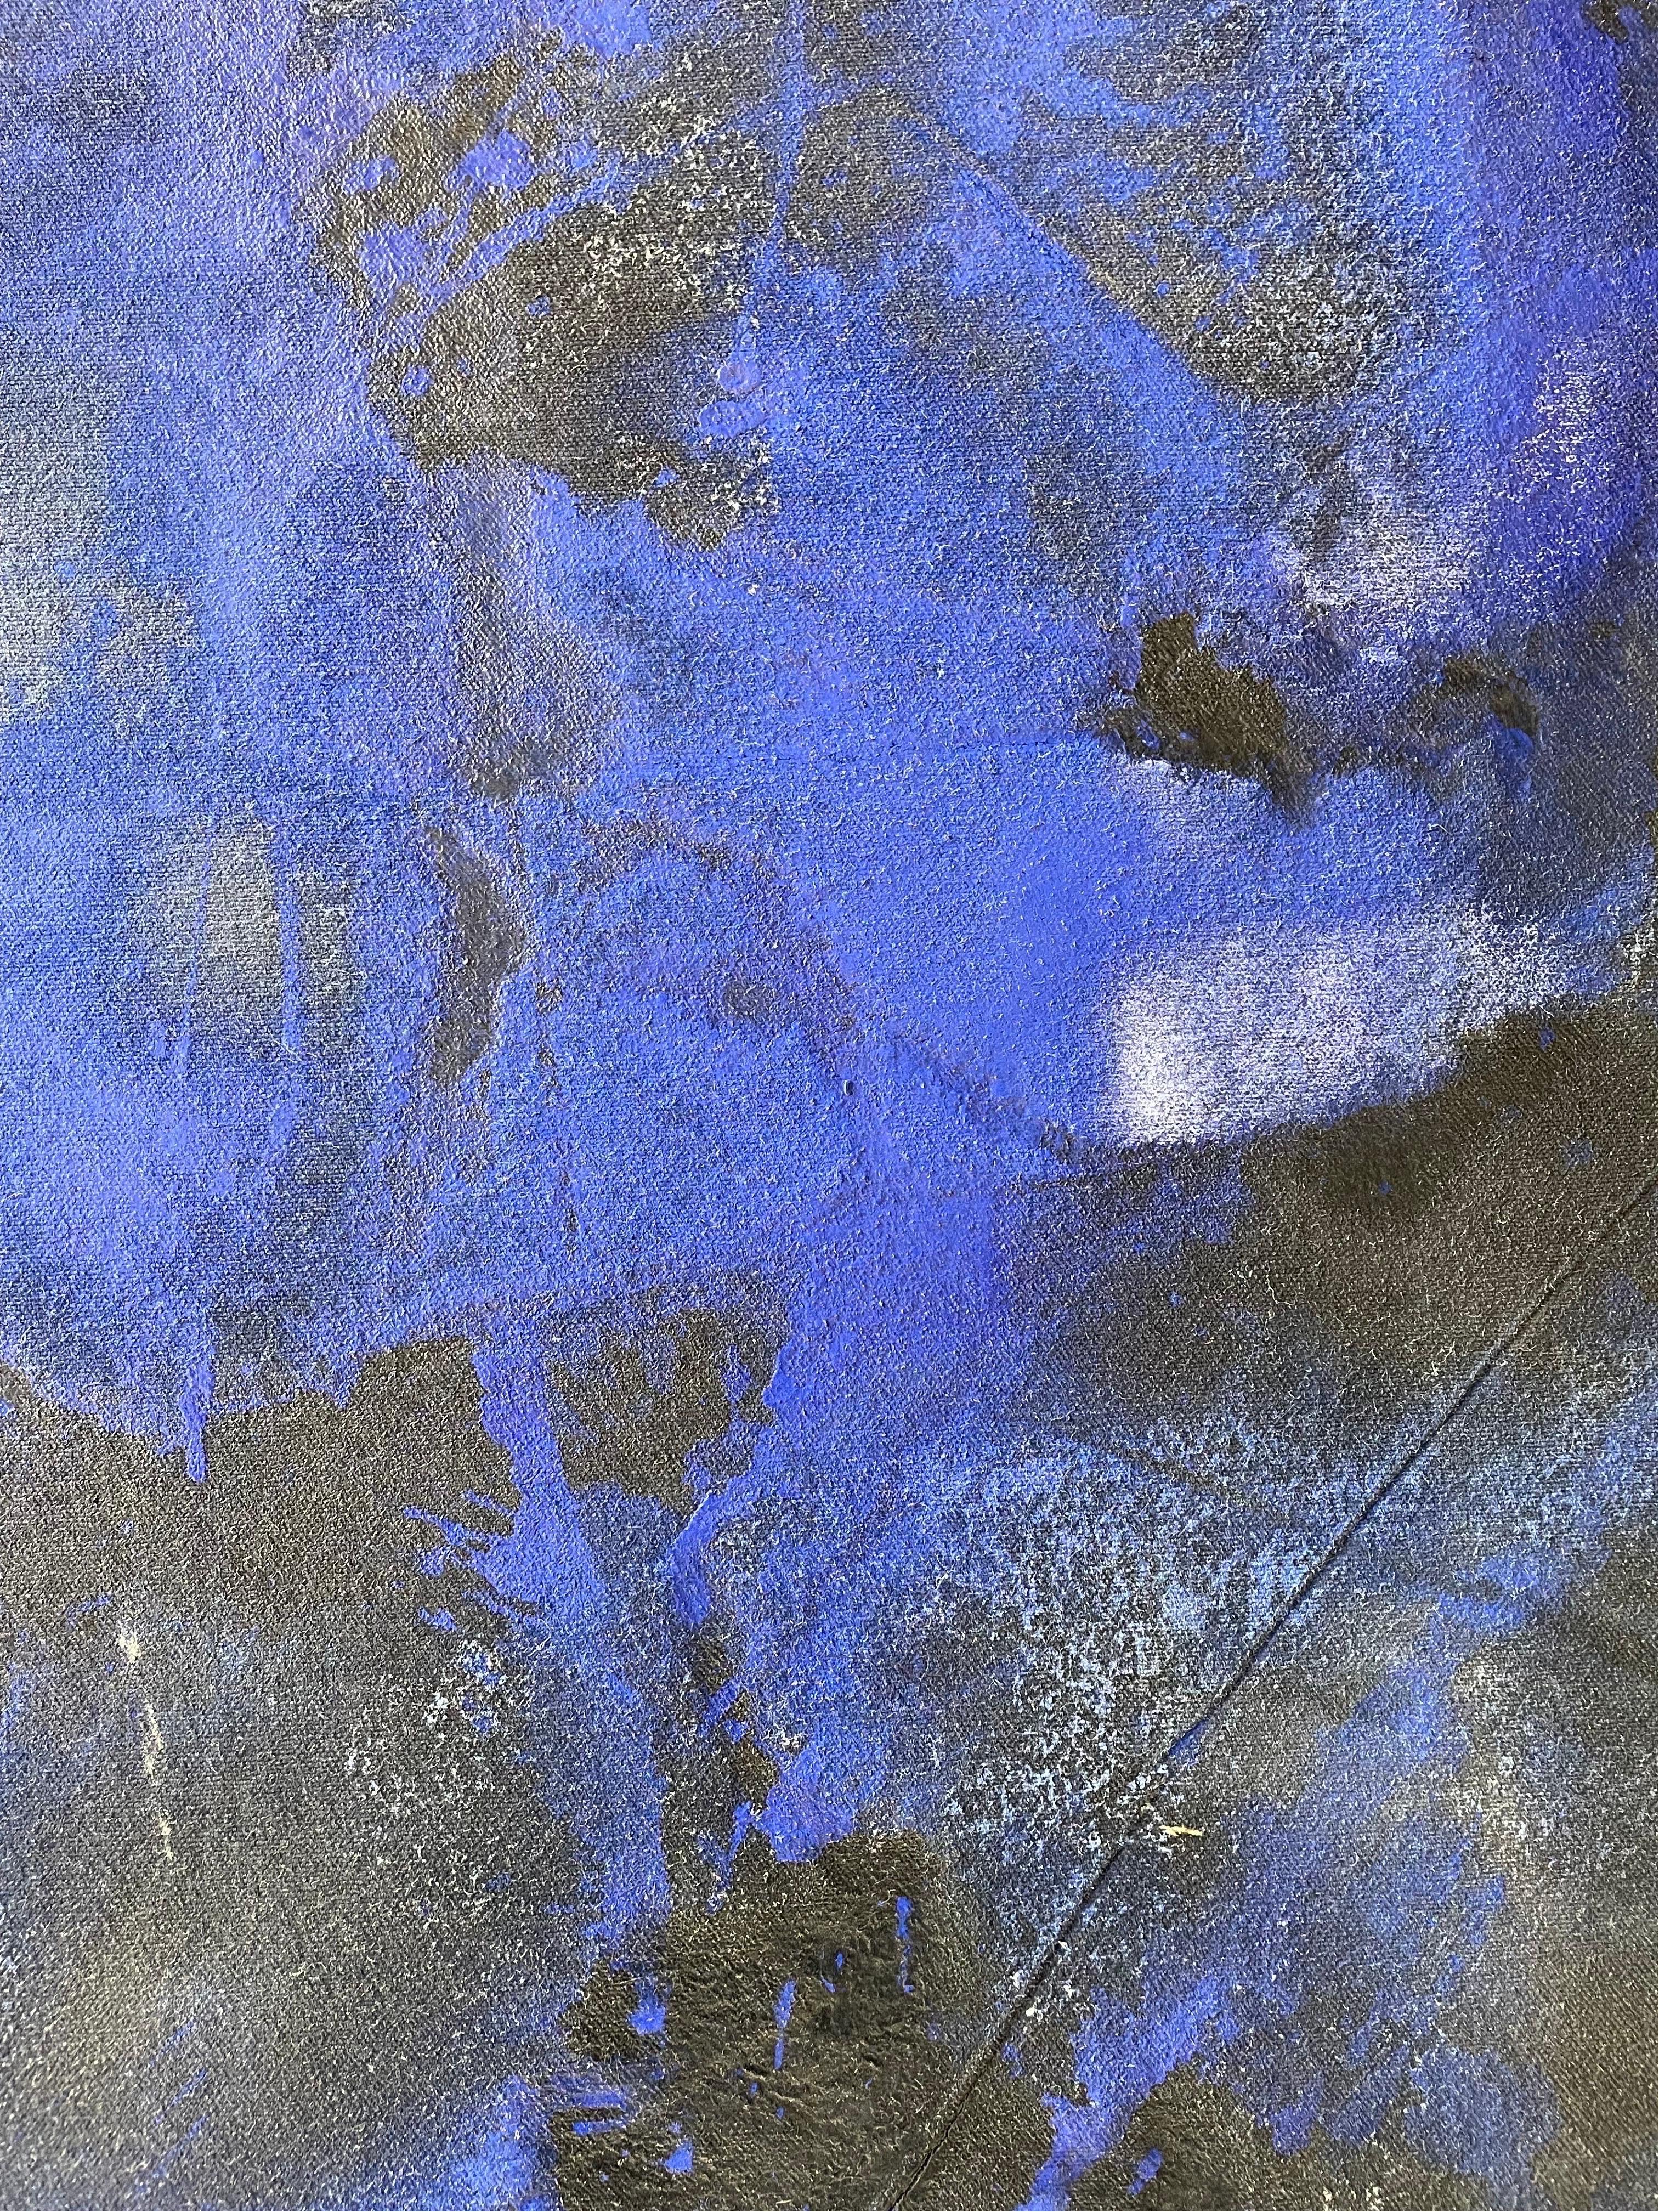 ABSTRACT Painting Texture Blue Contemporary Spanish Artist Iñaki Moreno 2022 3